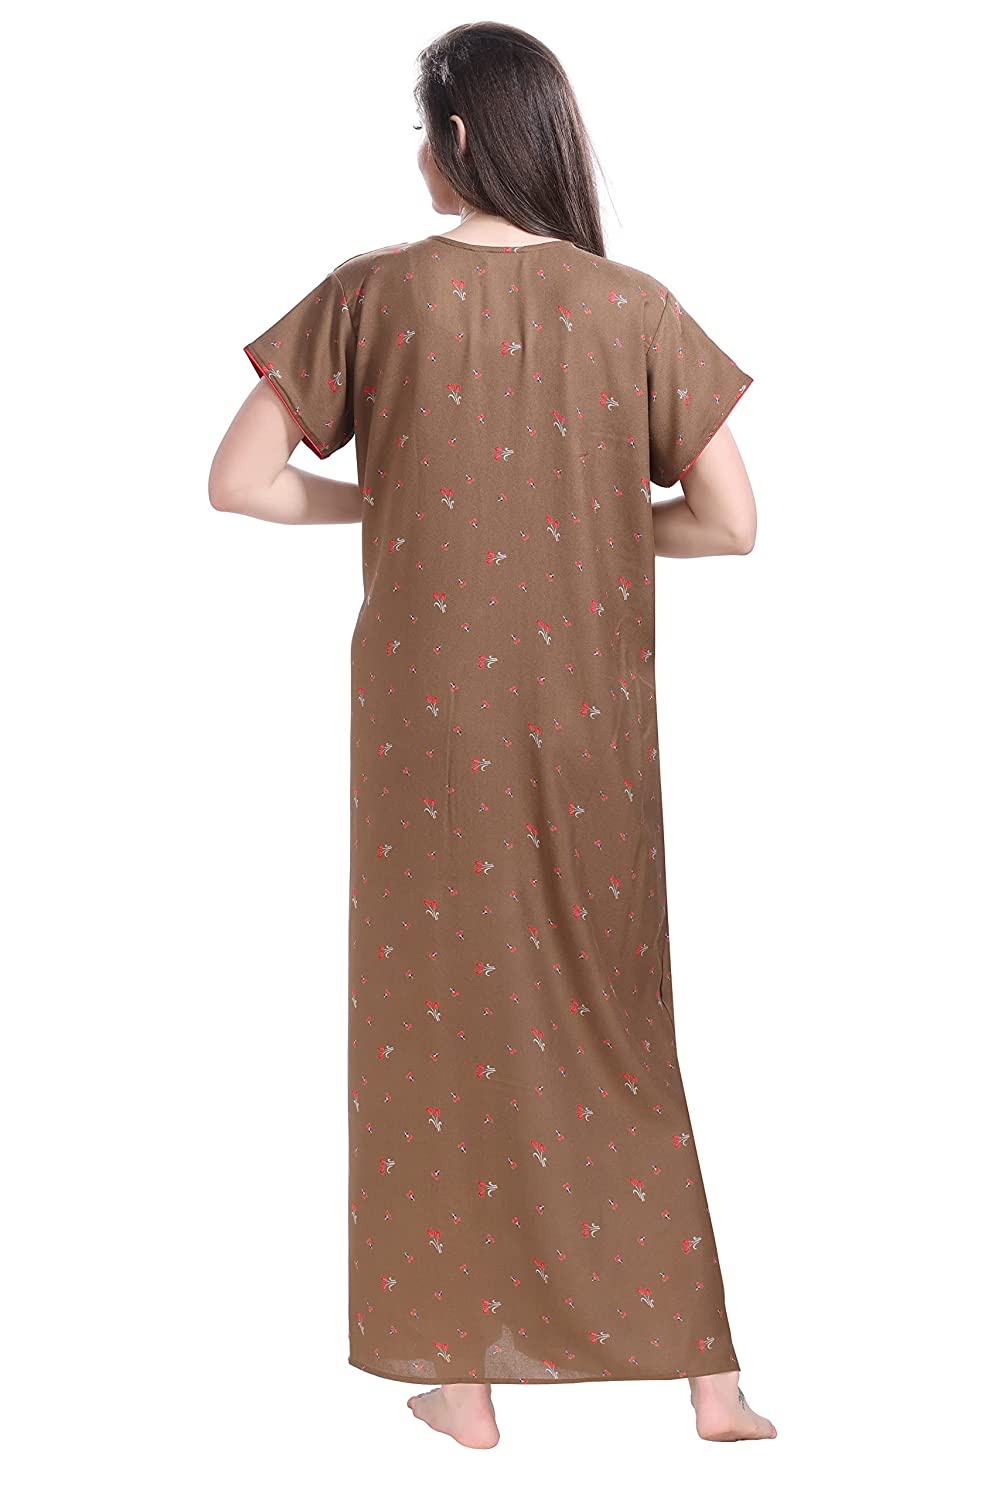 Rangjyot Night Dress 1 Fancy Cotton Hosiery Night Dress: Textilecatalog